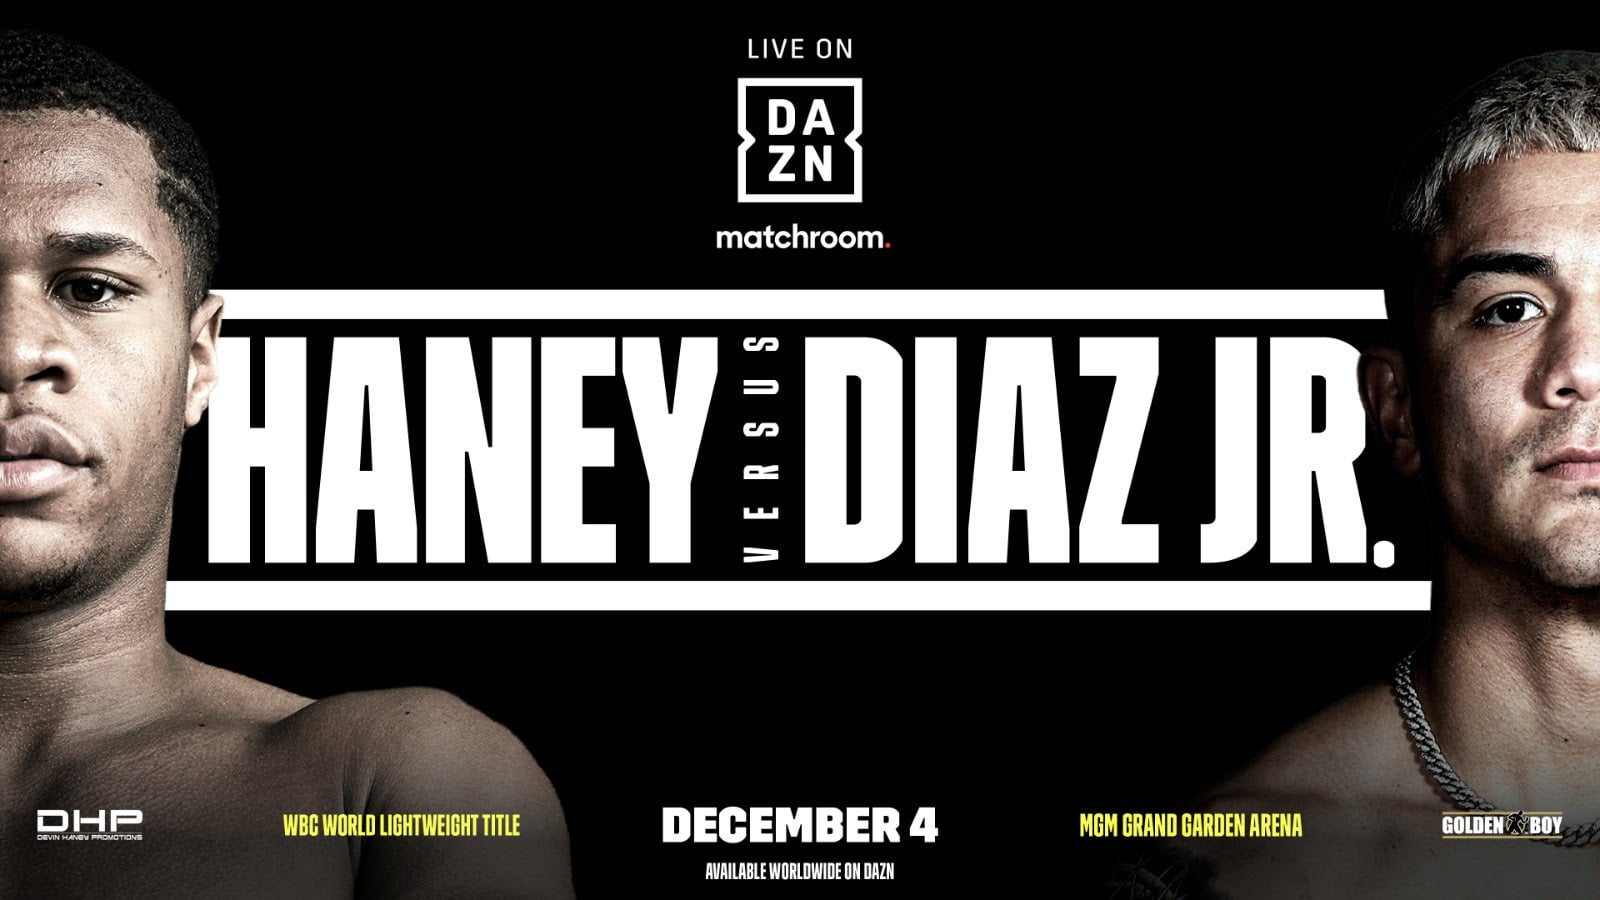 Devin Haney, Joseph Diaz Jr boxing image / photo